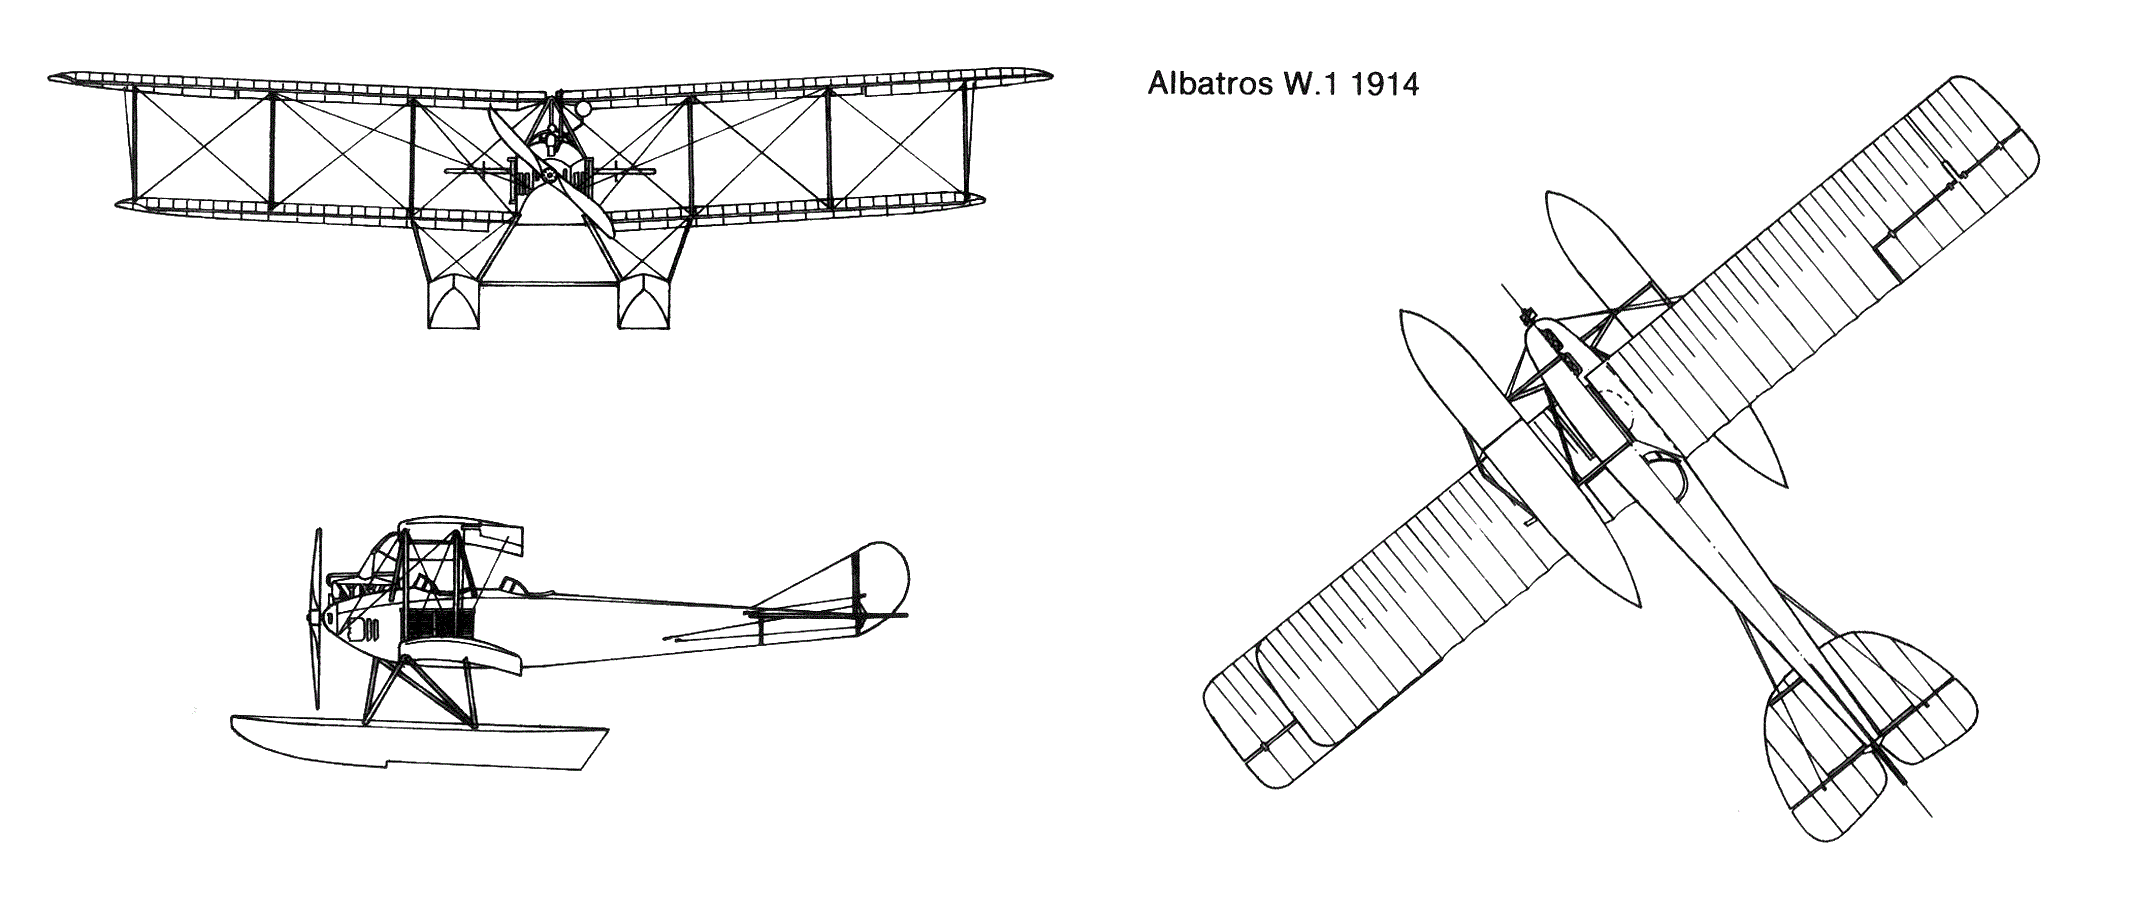 Albatros W-1